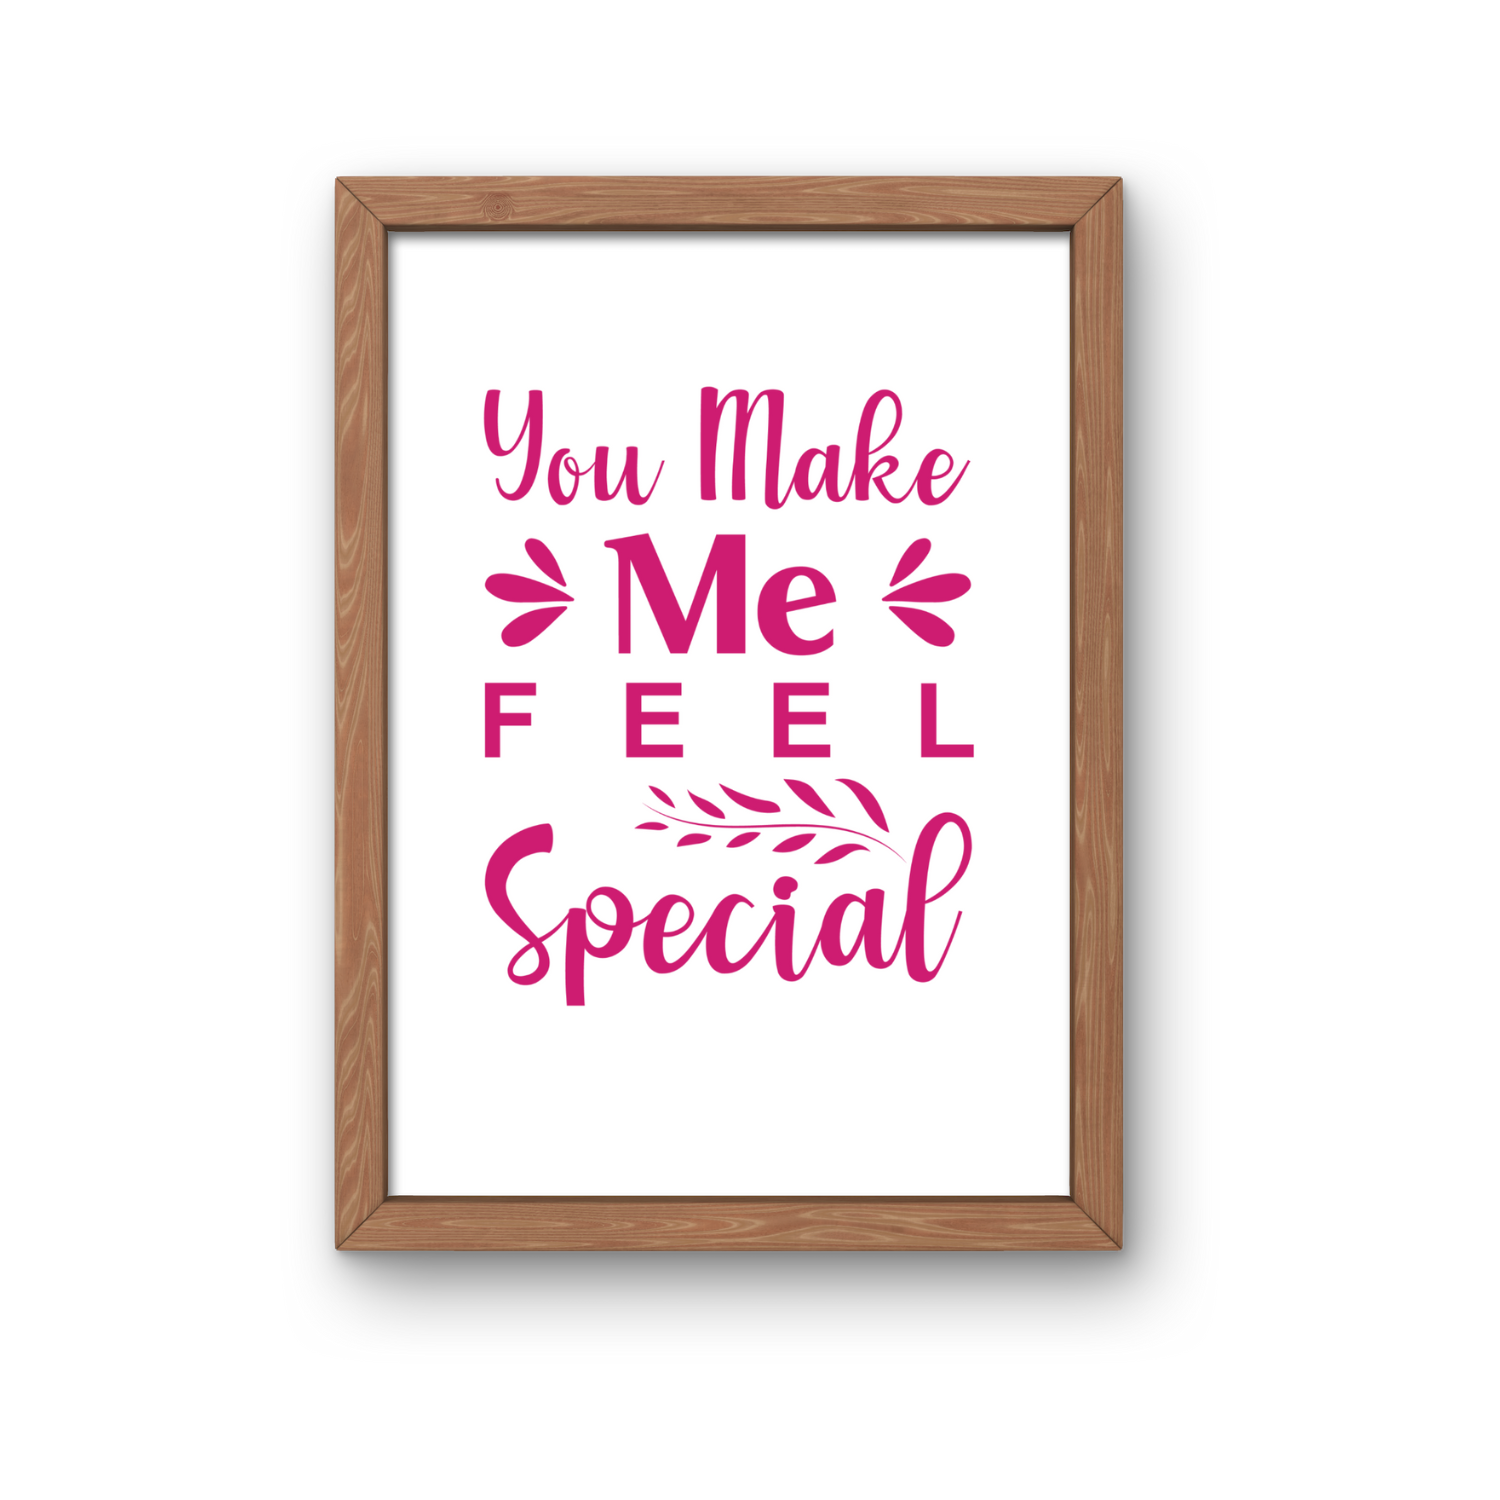 You make me feel special SVG | Digital Download | Cut File | SVG Only The Sweet Stuff